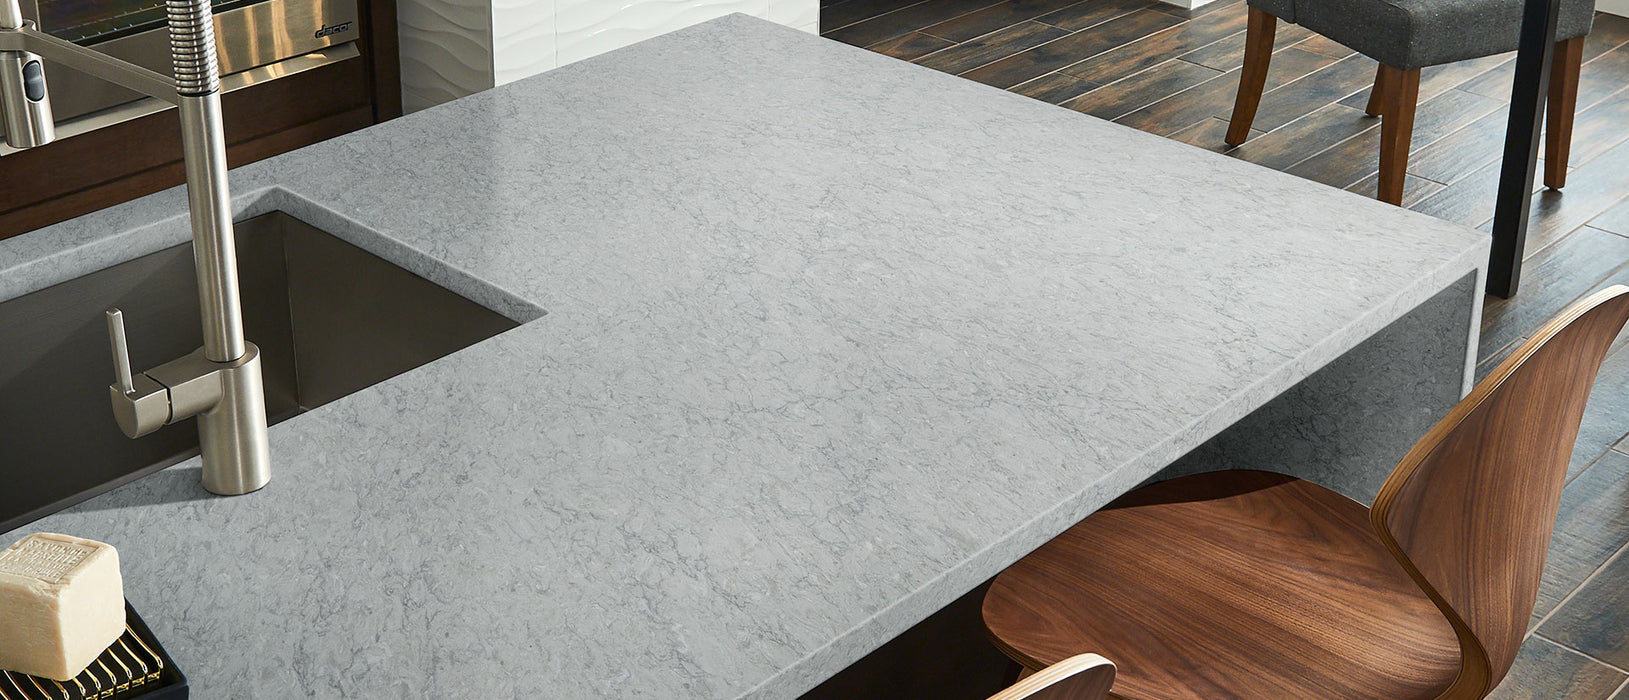 Galant gray quartz countertop kitchen scene